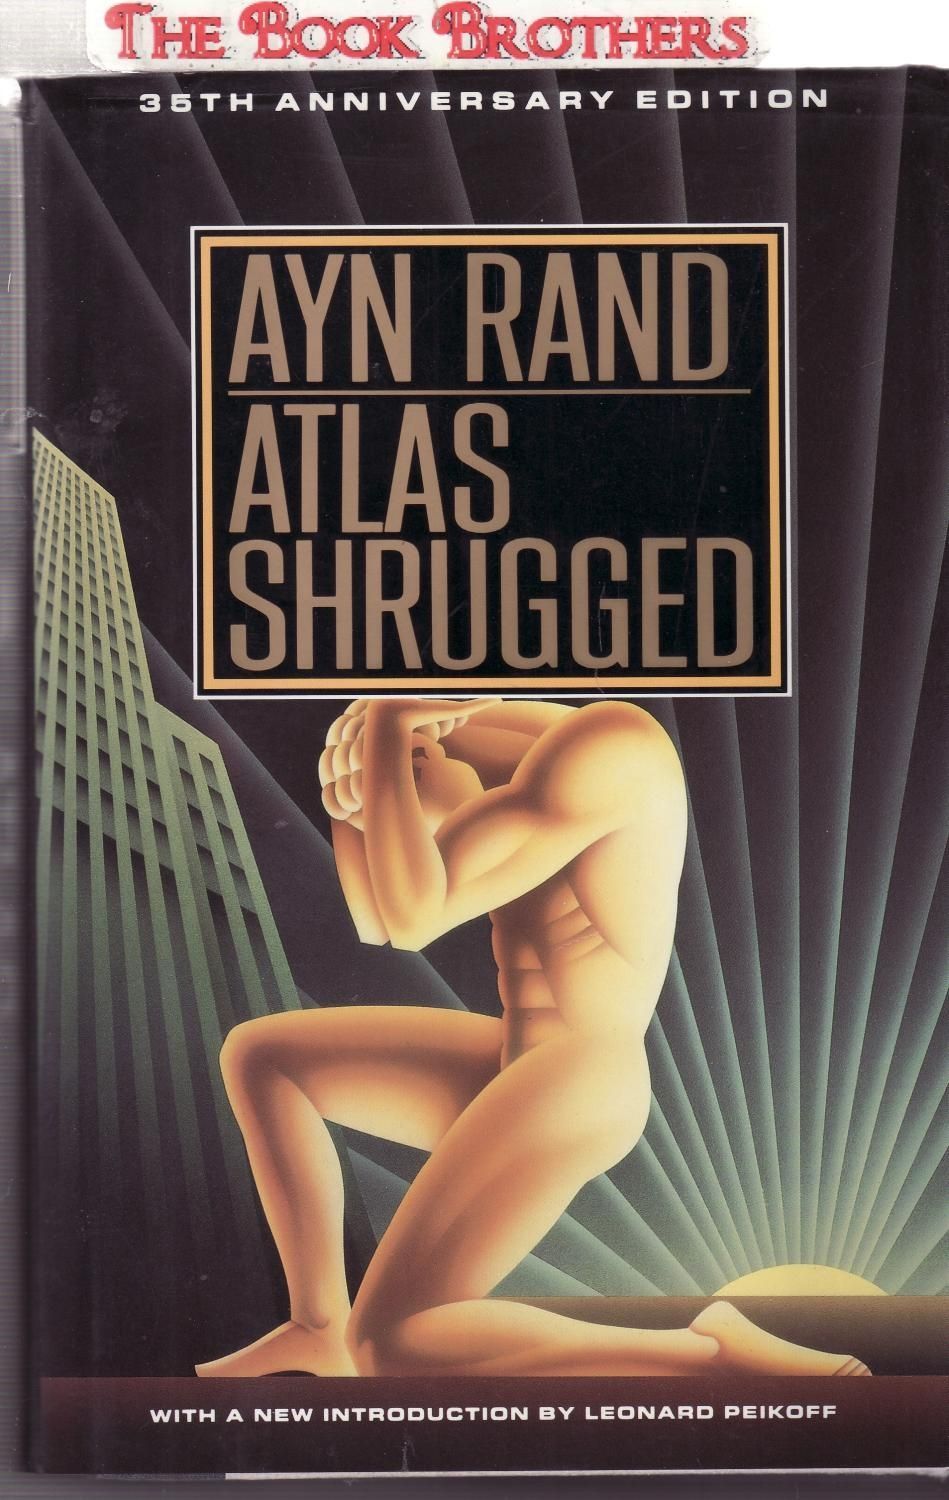 Atlas Shruggedayn Rand – Abebooks Pertaining To Atlas Shrugged Cover Art (Photo 10 of 20)